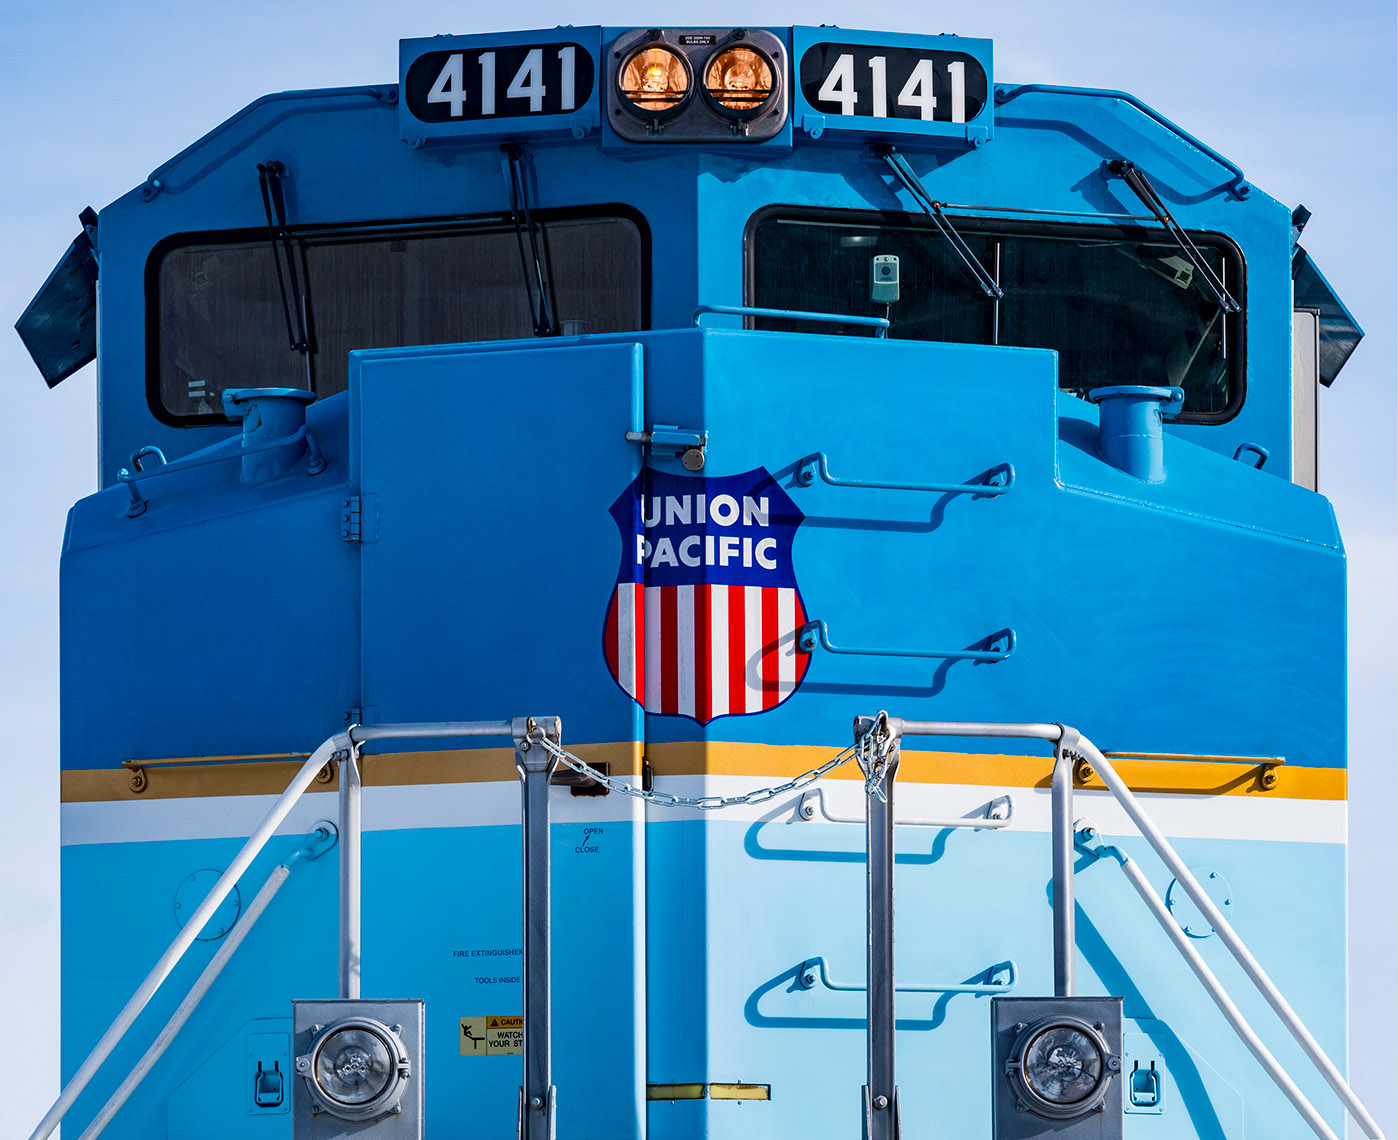 Detail of UPRR #4141 Diesel engine locomotive  by Scott Dobry Pictures photographer in Omaha, Nebraska